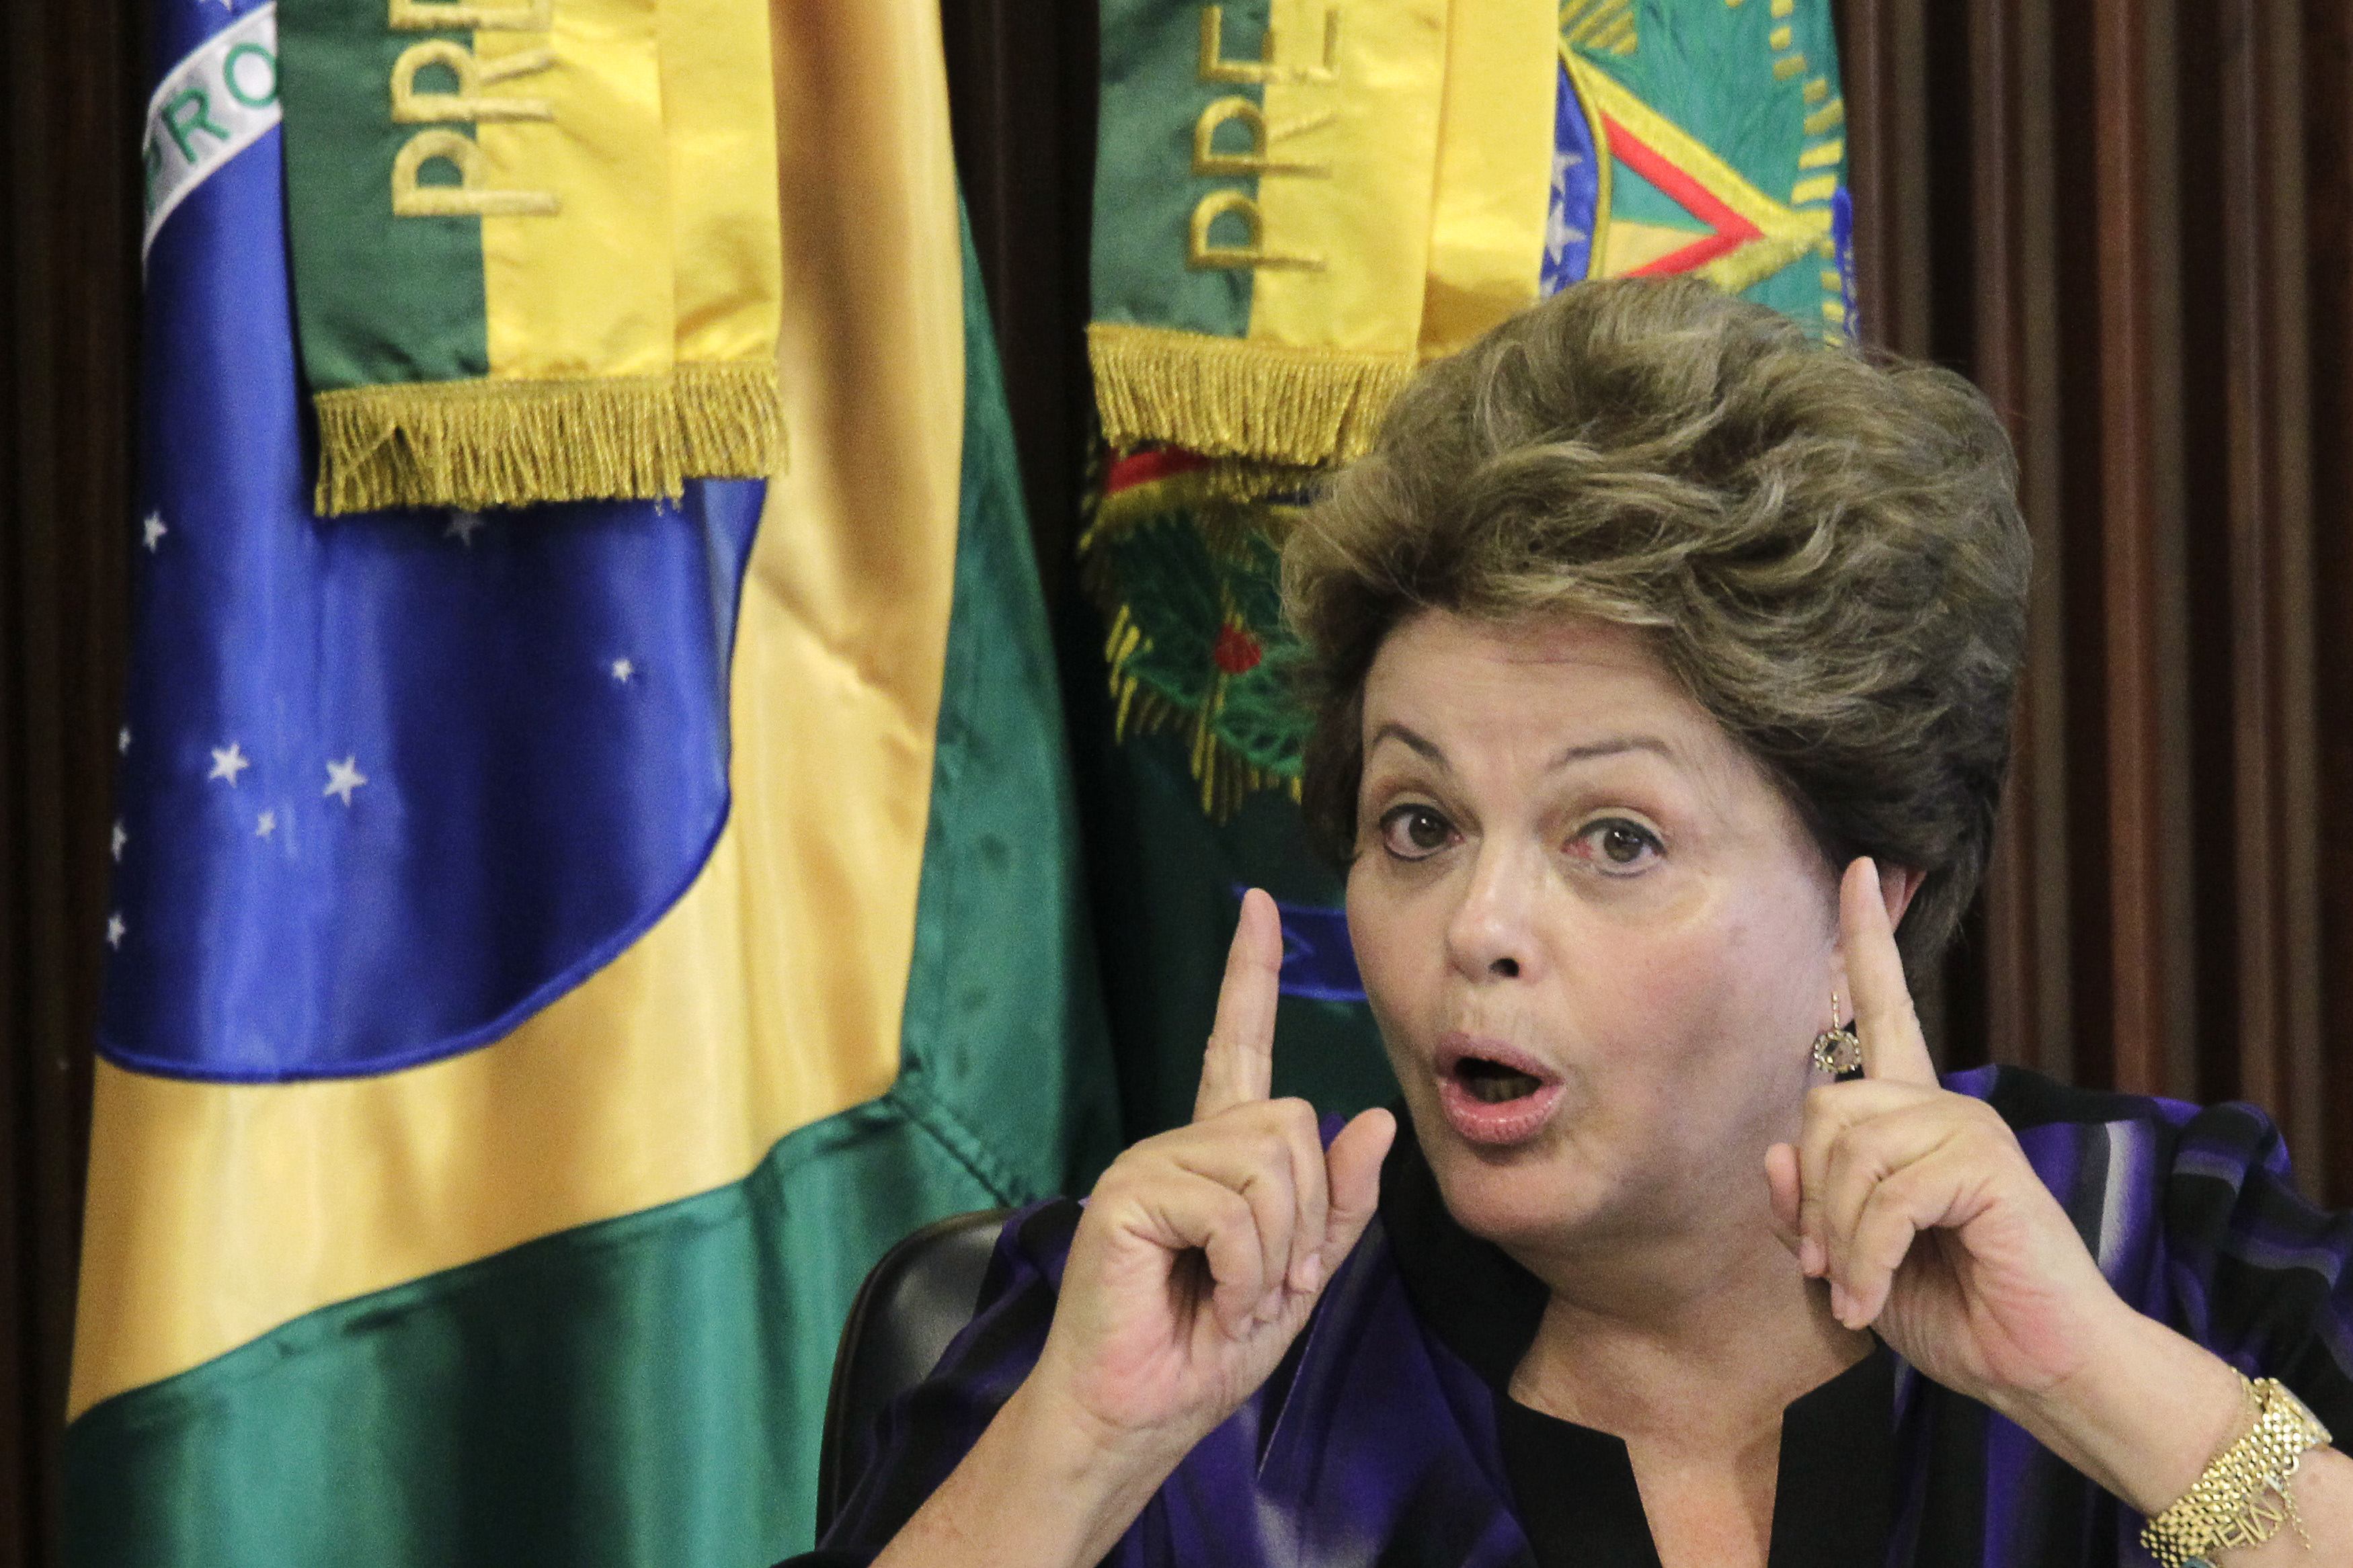 Rousseff lidera con amplia ventaja encuesta previa a elecciones de 2014